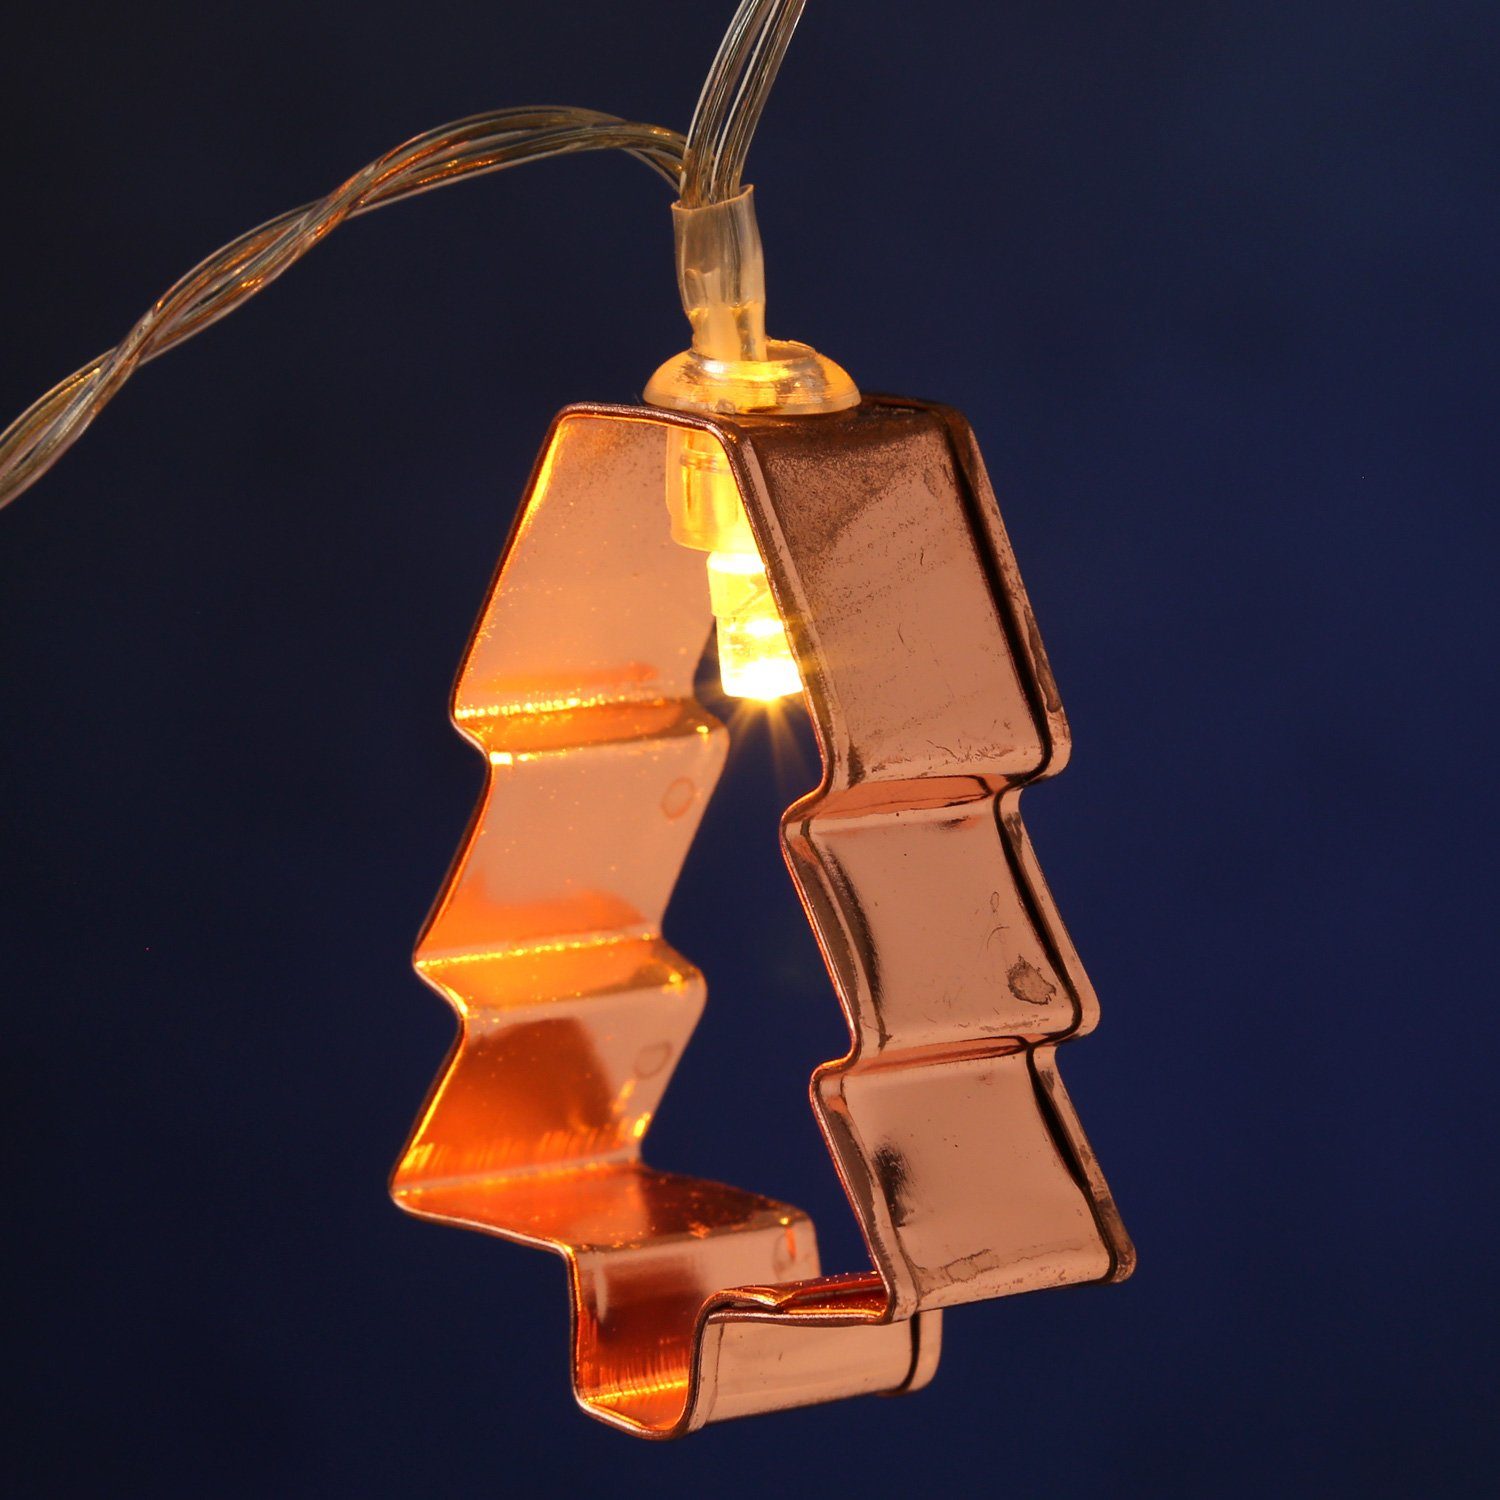 MARELIDA LED-Lichterkette Backförmchen Keksausstecher Baum Tannen kupferfarbene Plätzchen, 8-flammig